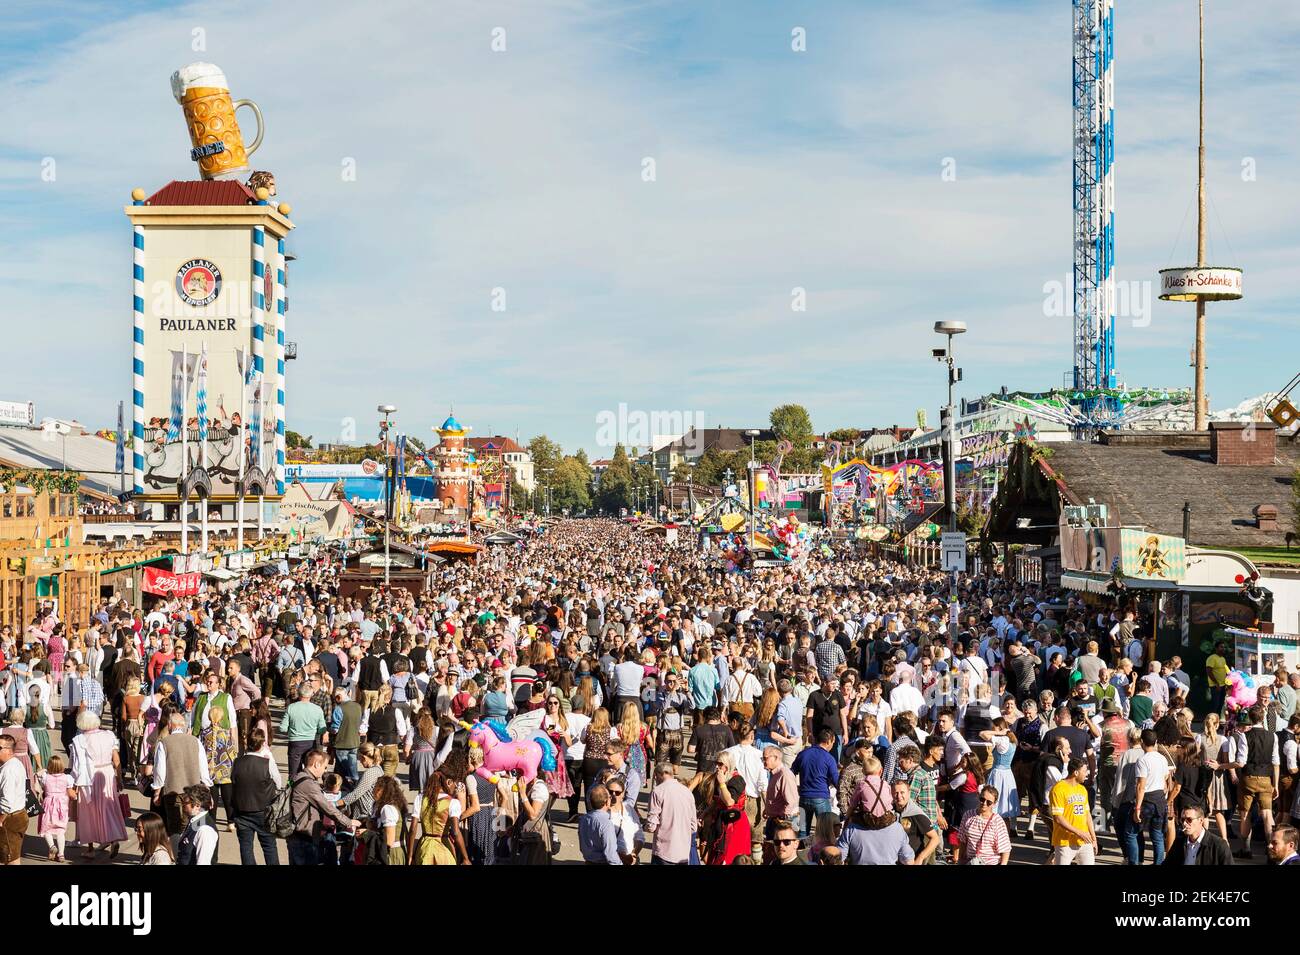 Bavaria-Munich-Germany, September 29th 2019: The biggest folk festival in the world, the Munich Oktoberfest, a typical scene during the Munich Oktober Stock Photo